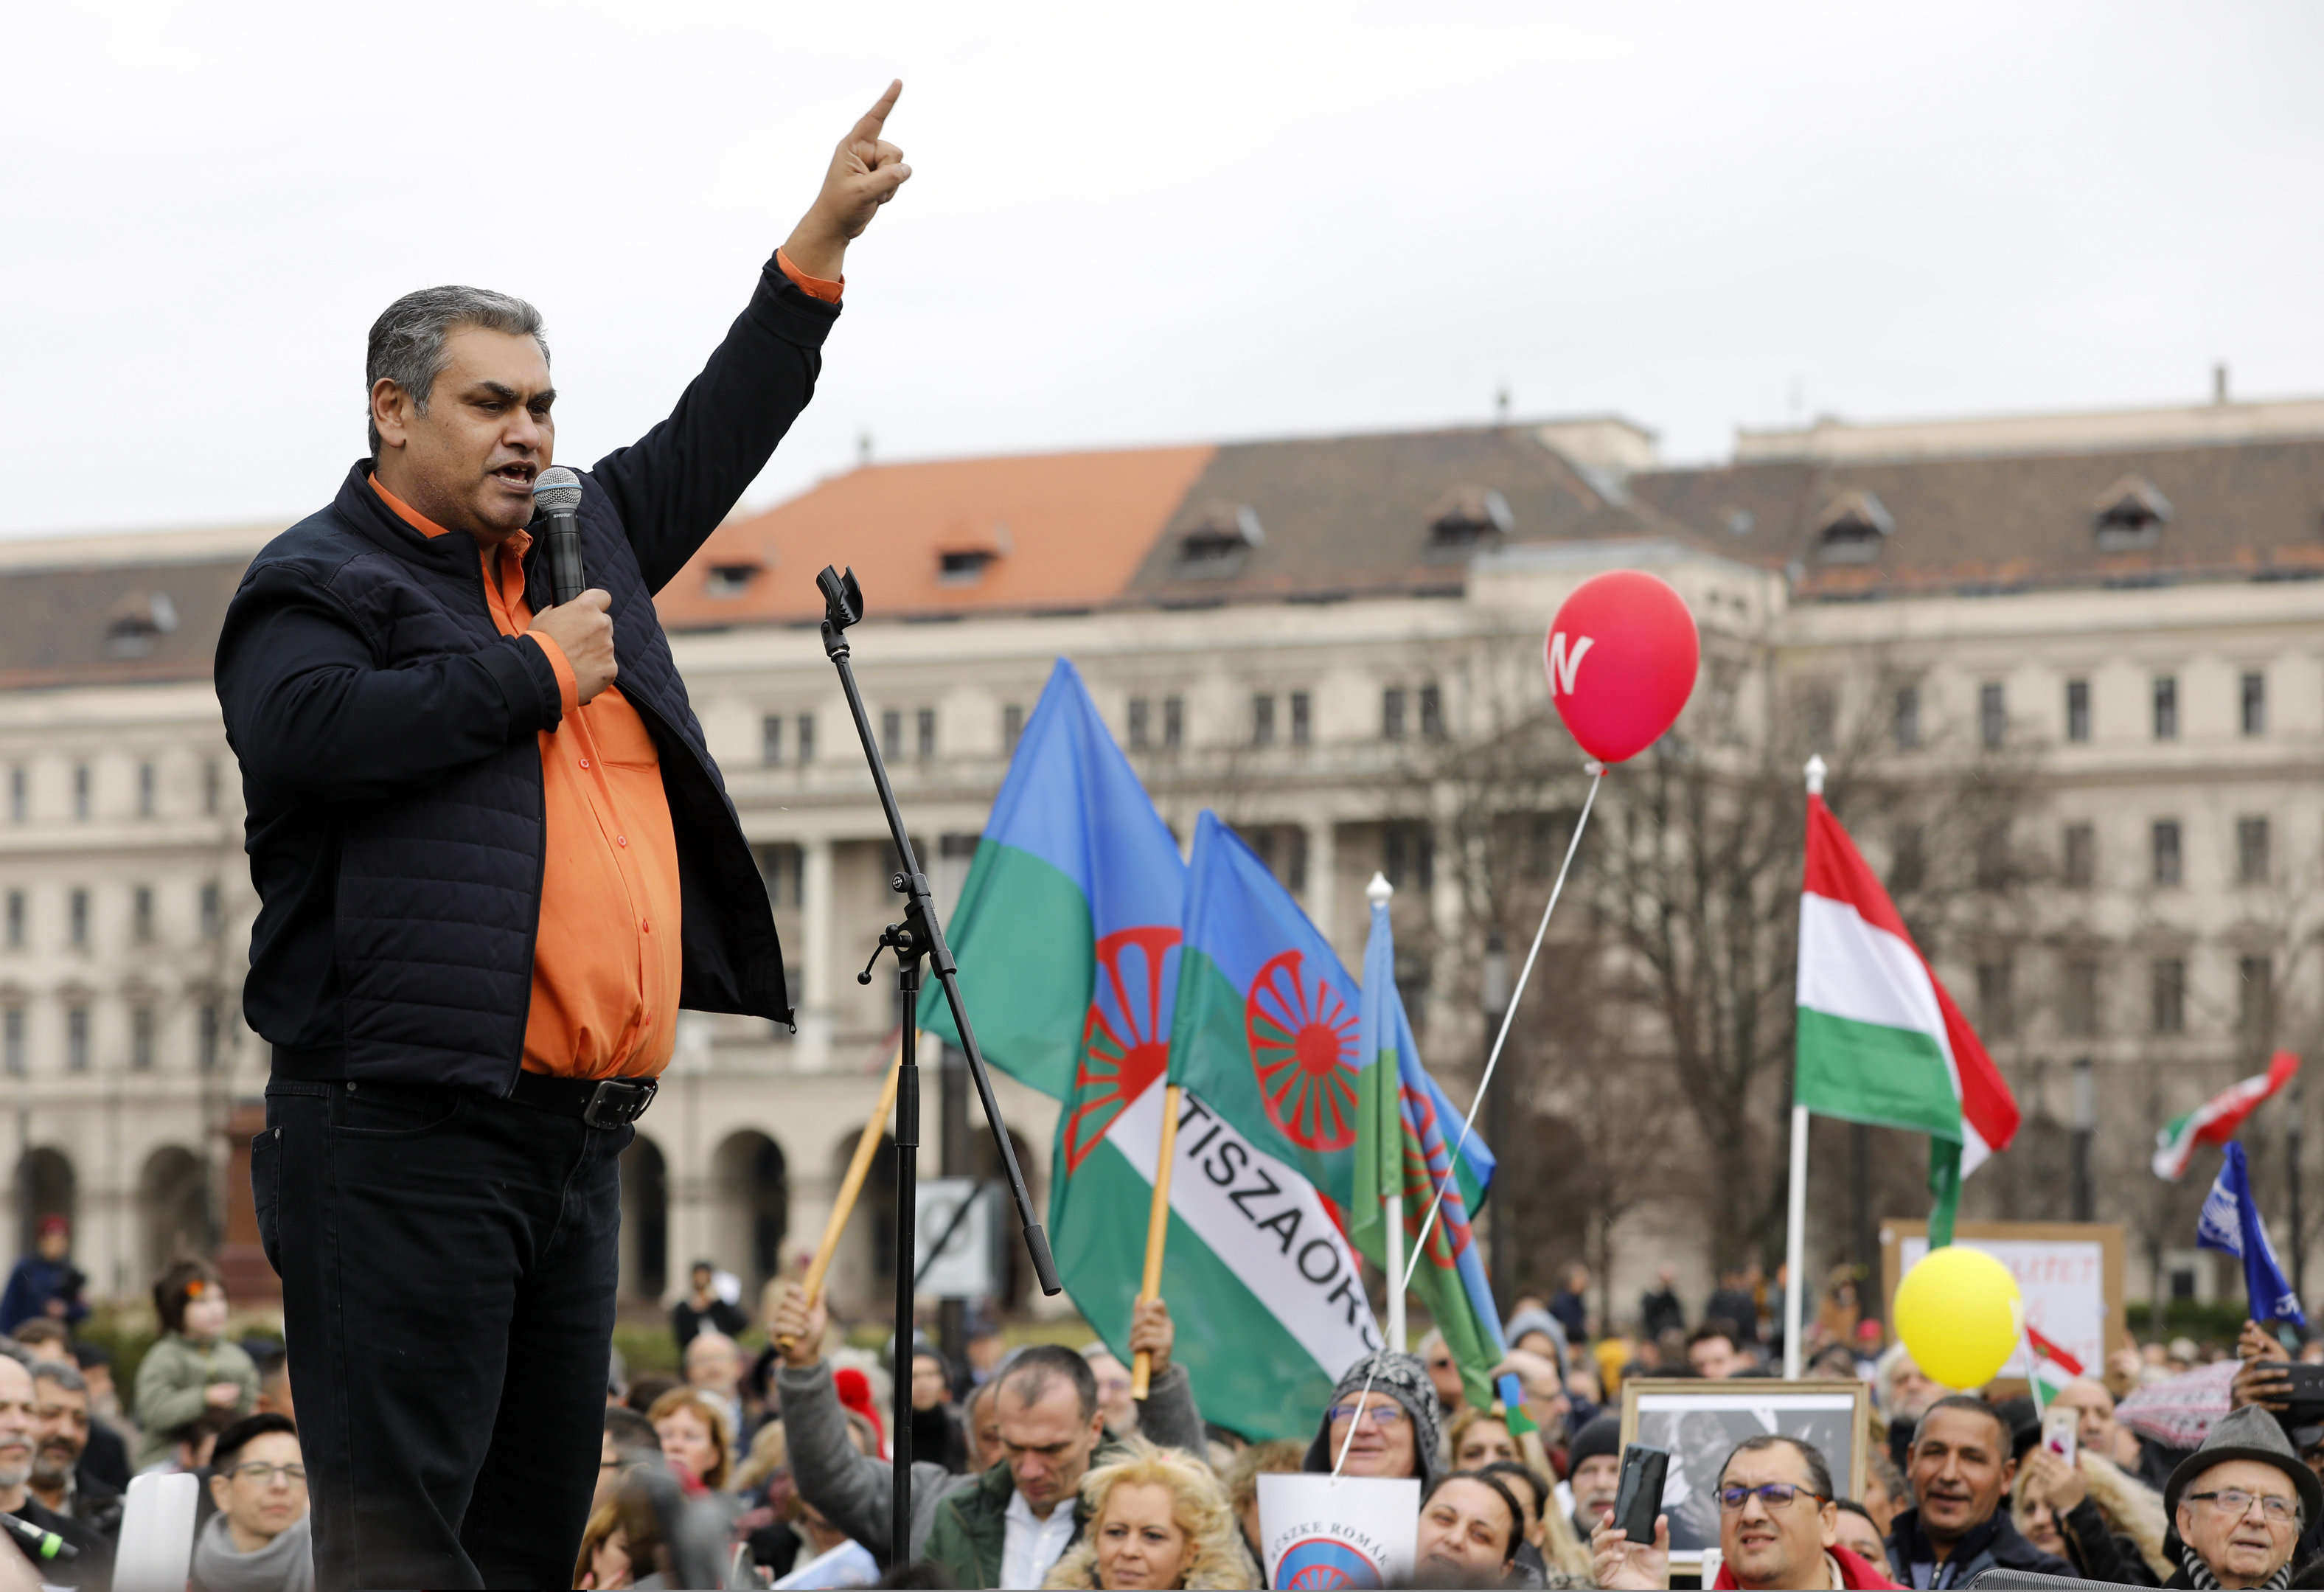 demonstrație pentru romi